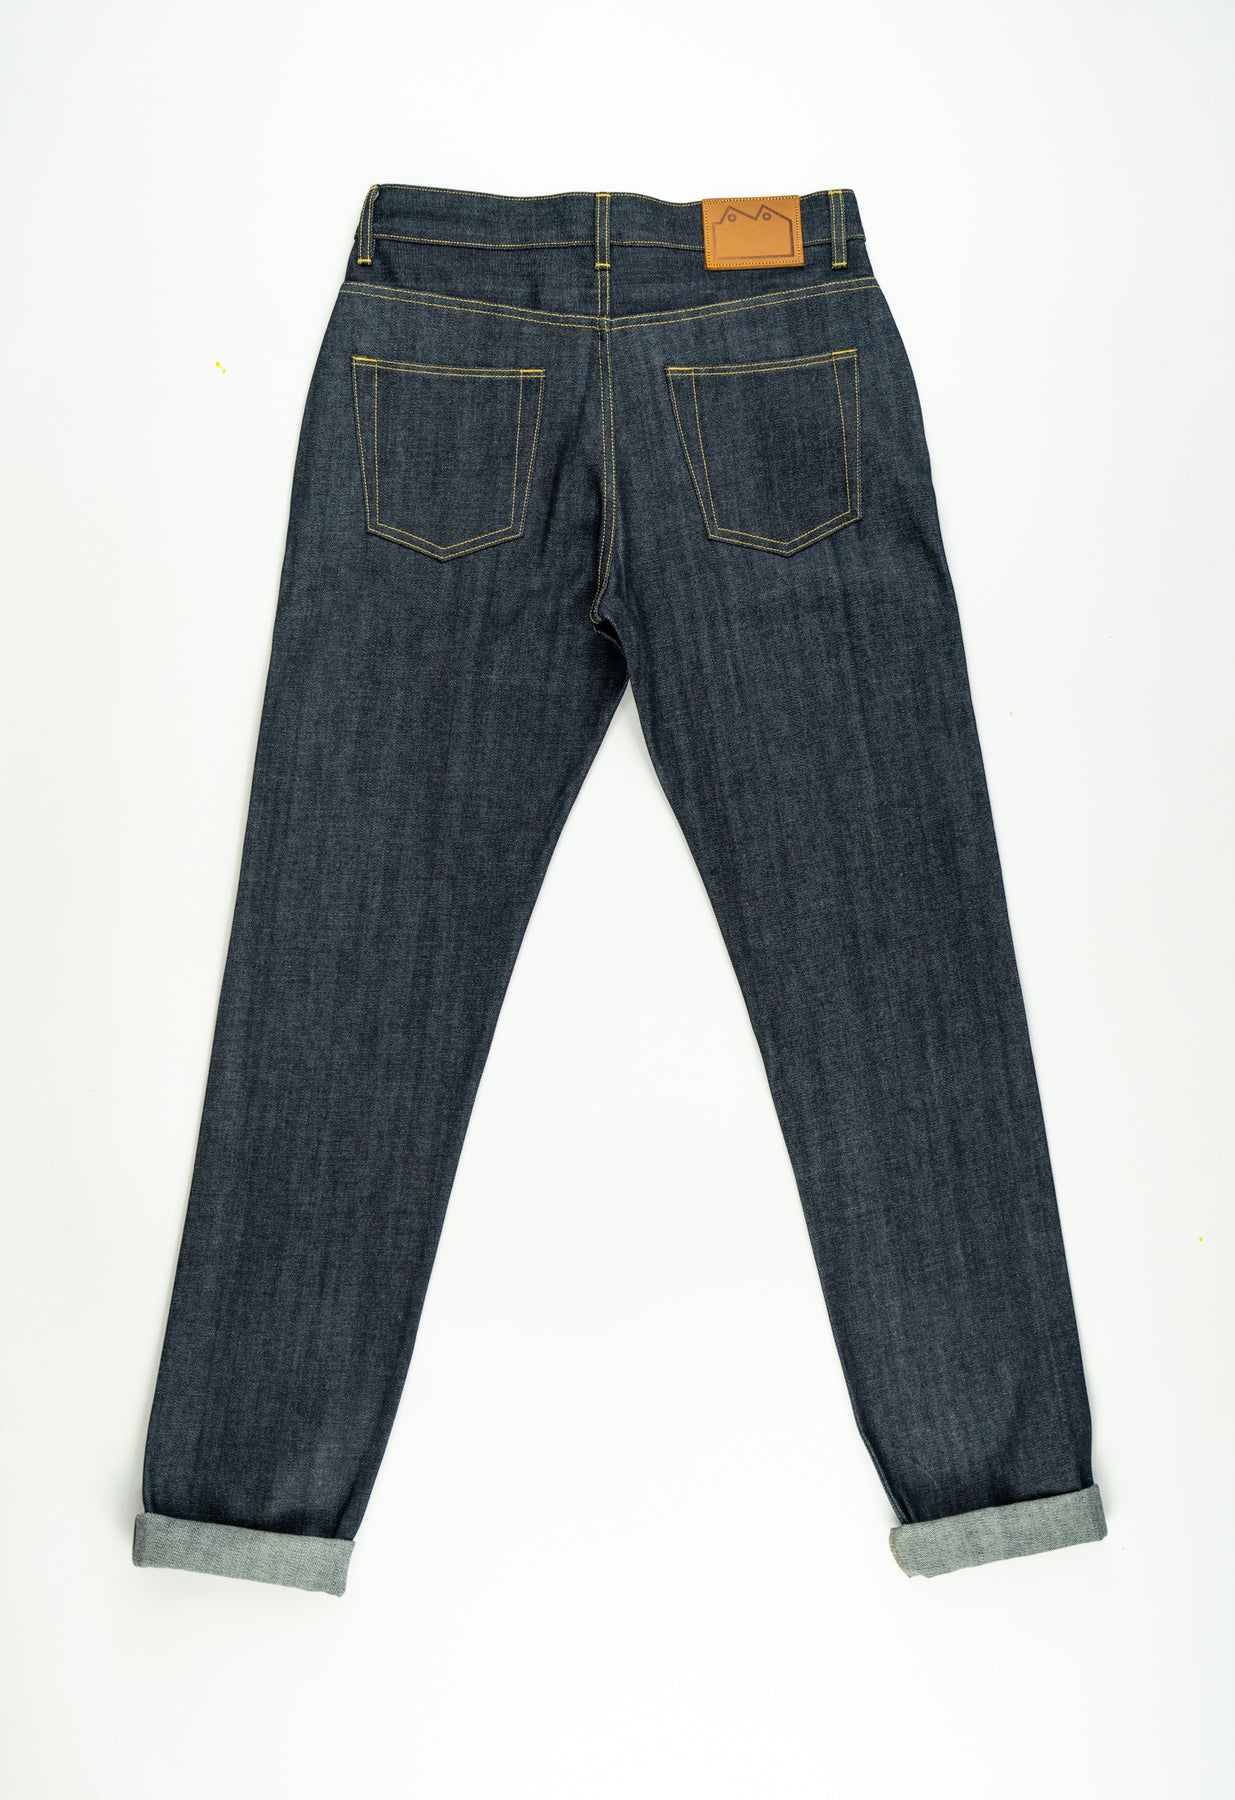 RMC Jeans Indigo Japanese Selvedge Denim Designer Jeans